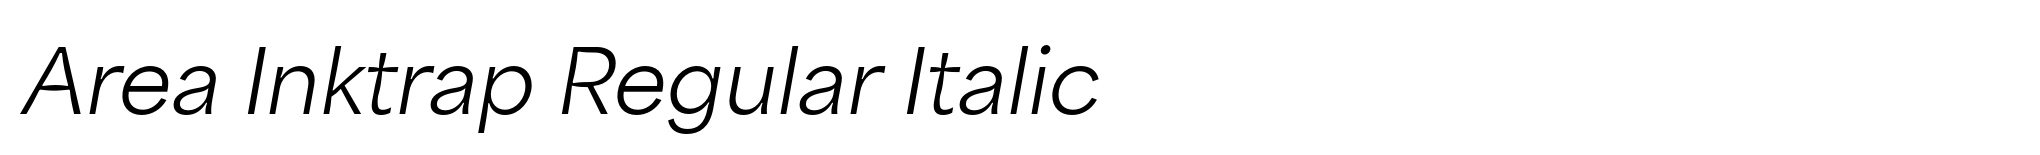 Area Inktrap Regular Italic image